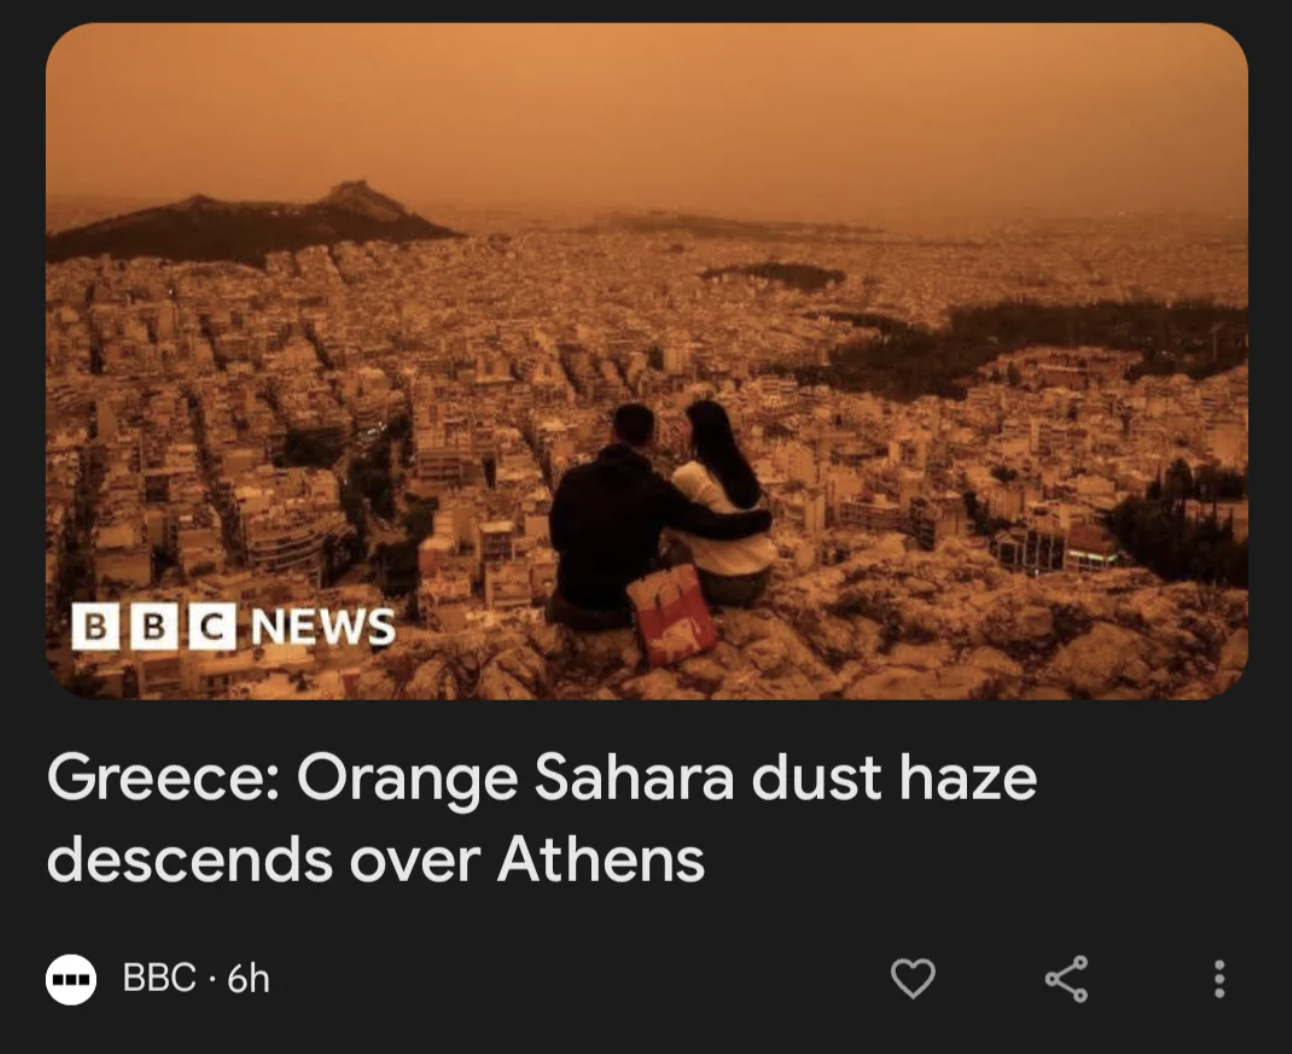 Saharan dust - Bbc News Greece Orange Sahara dust haze descends over Athens Bbc 6h L